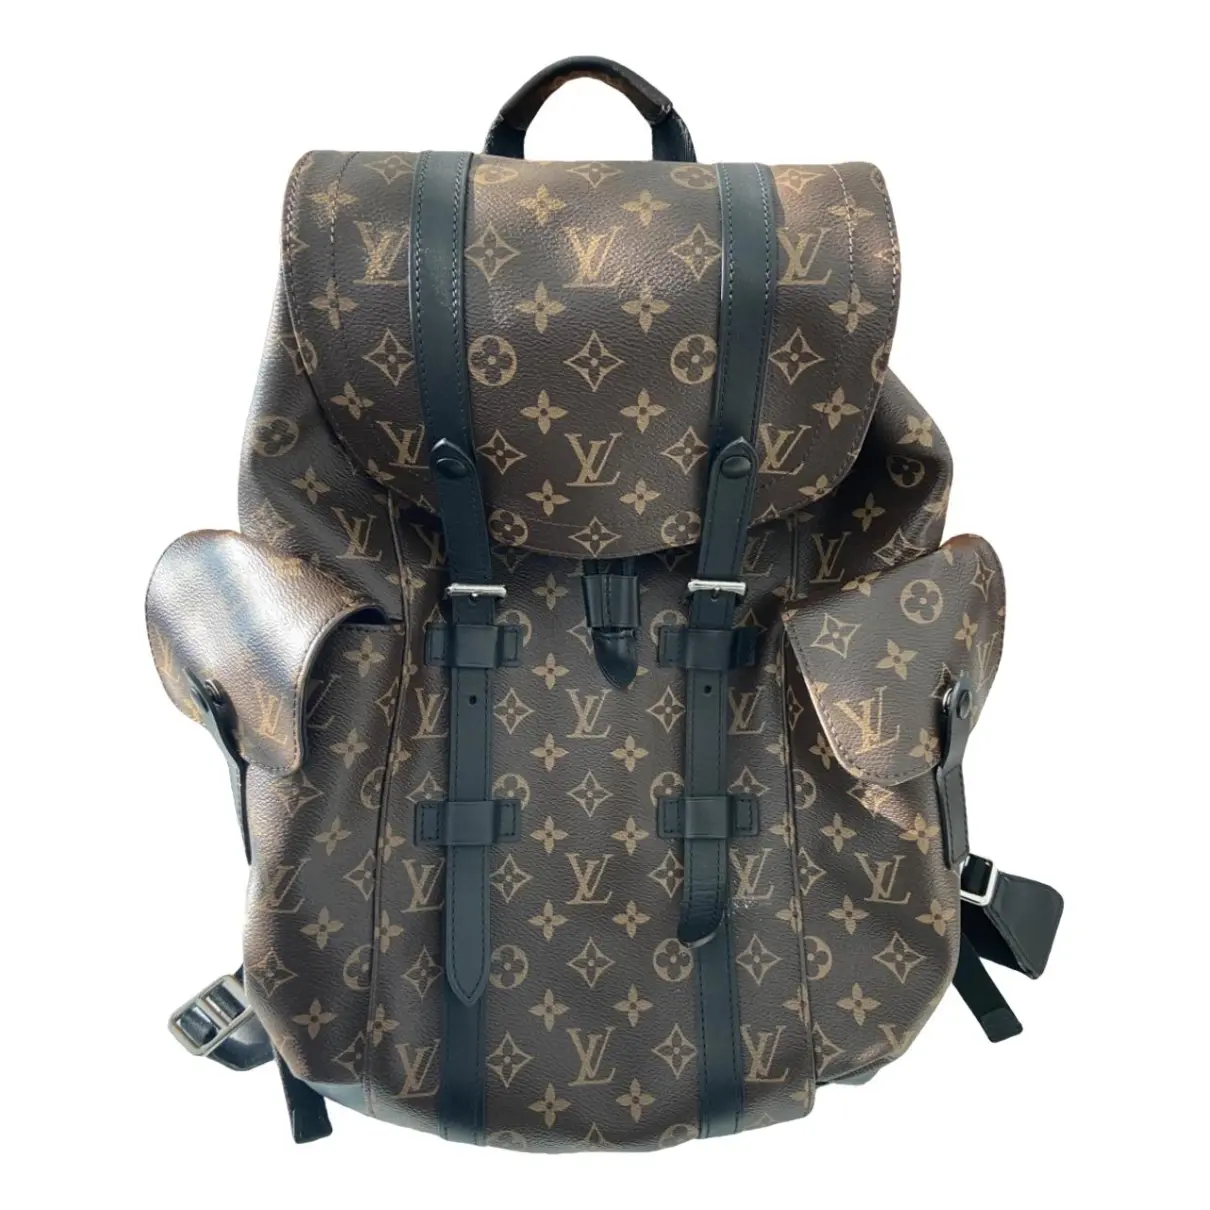 Christopher Backpack leather bag